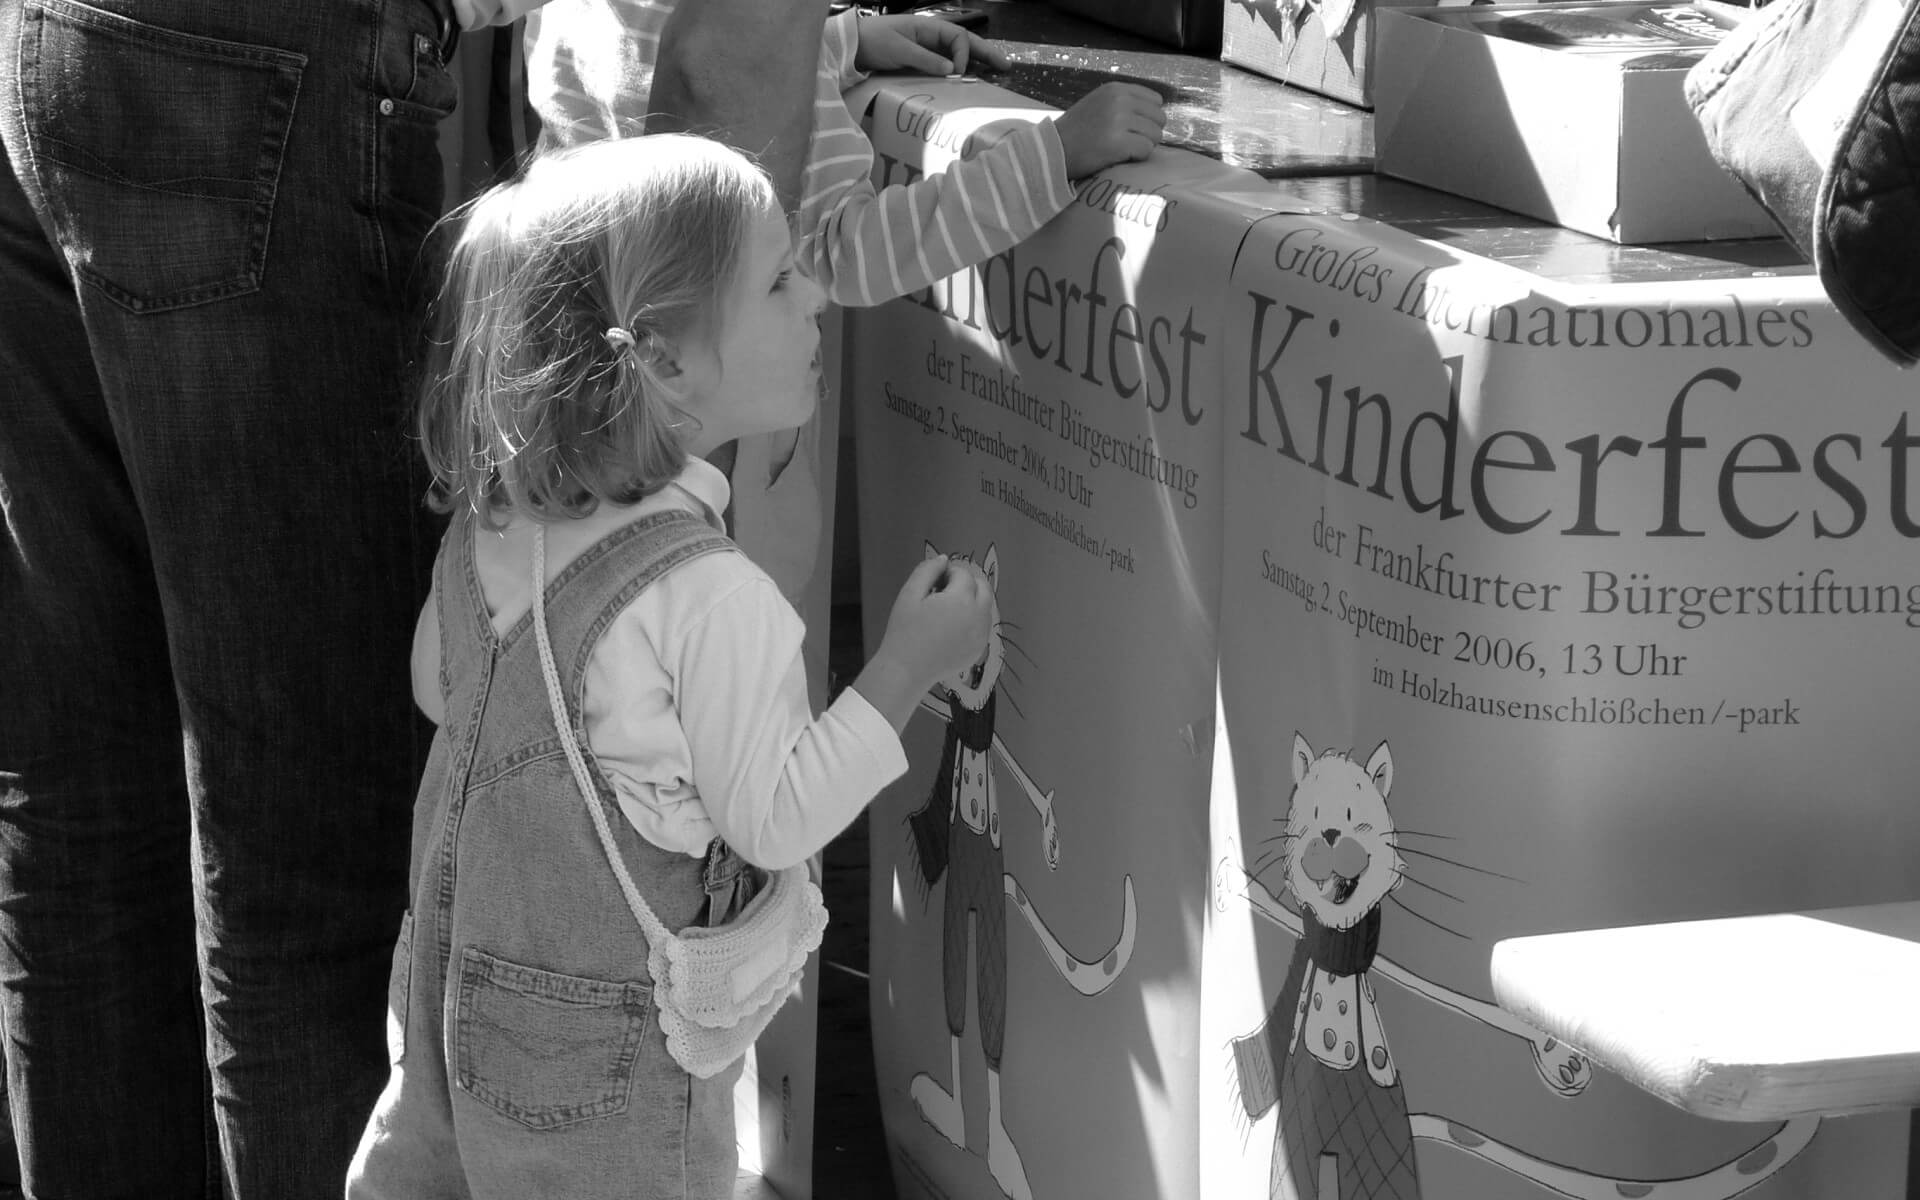 Kinderfest vor dem Holzhausenschlösschen